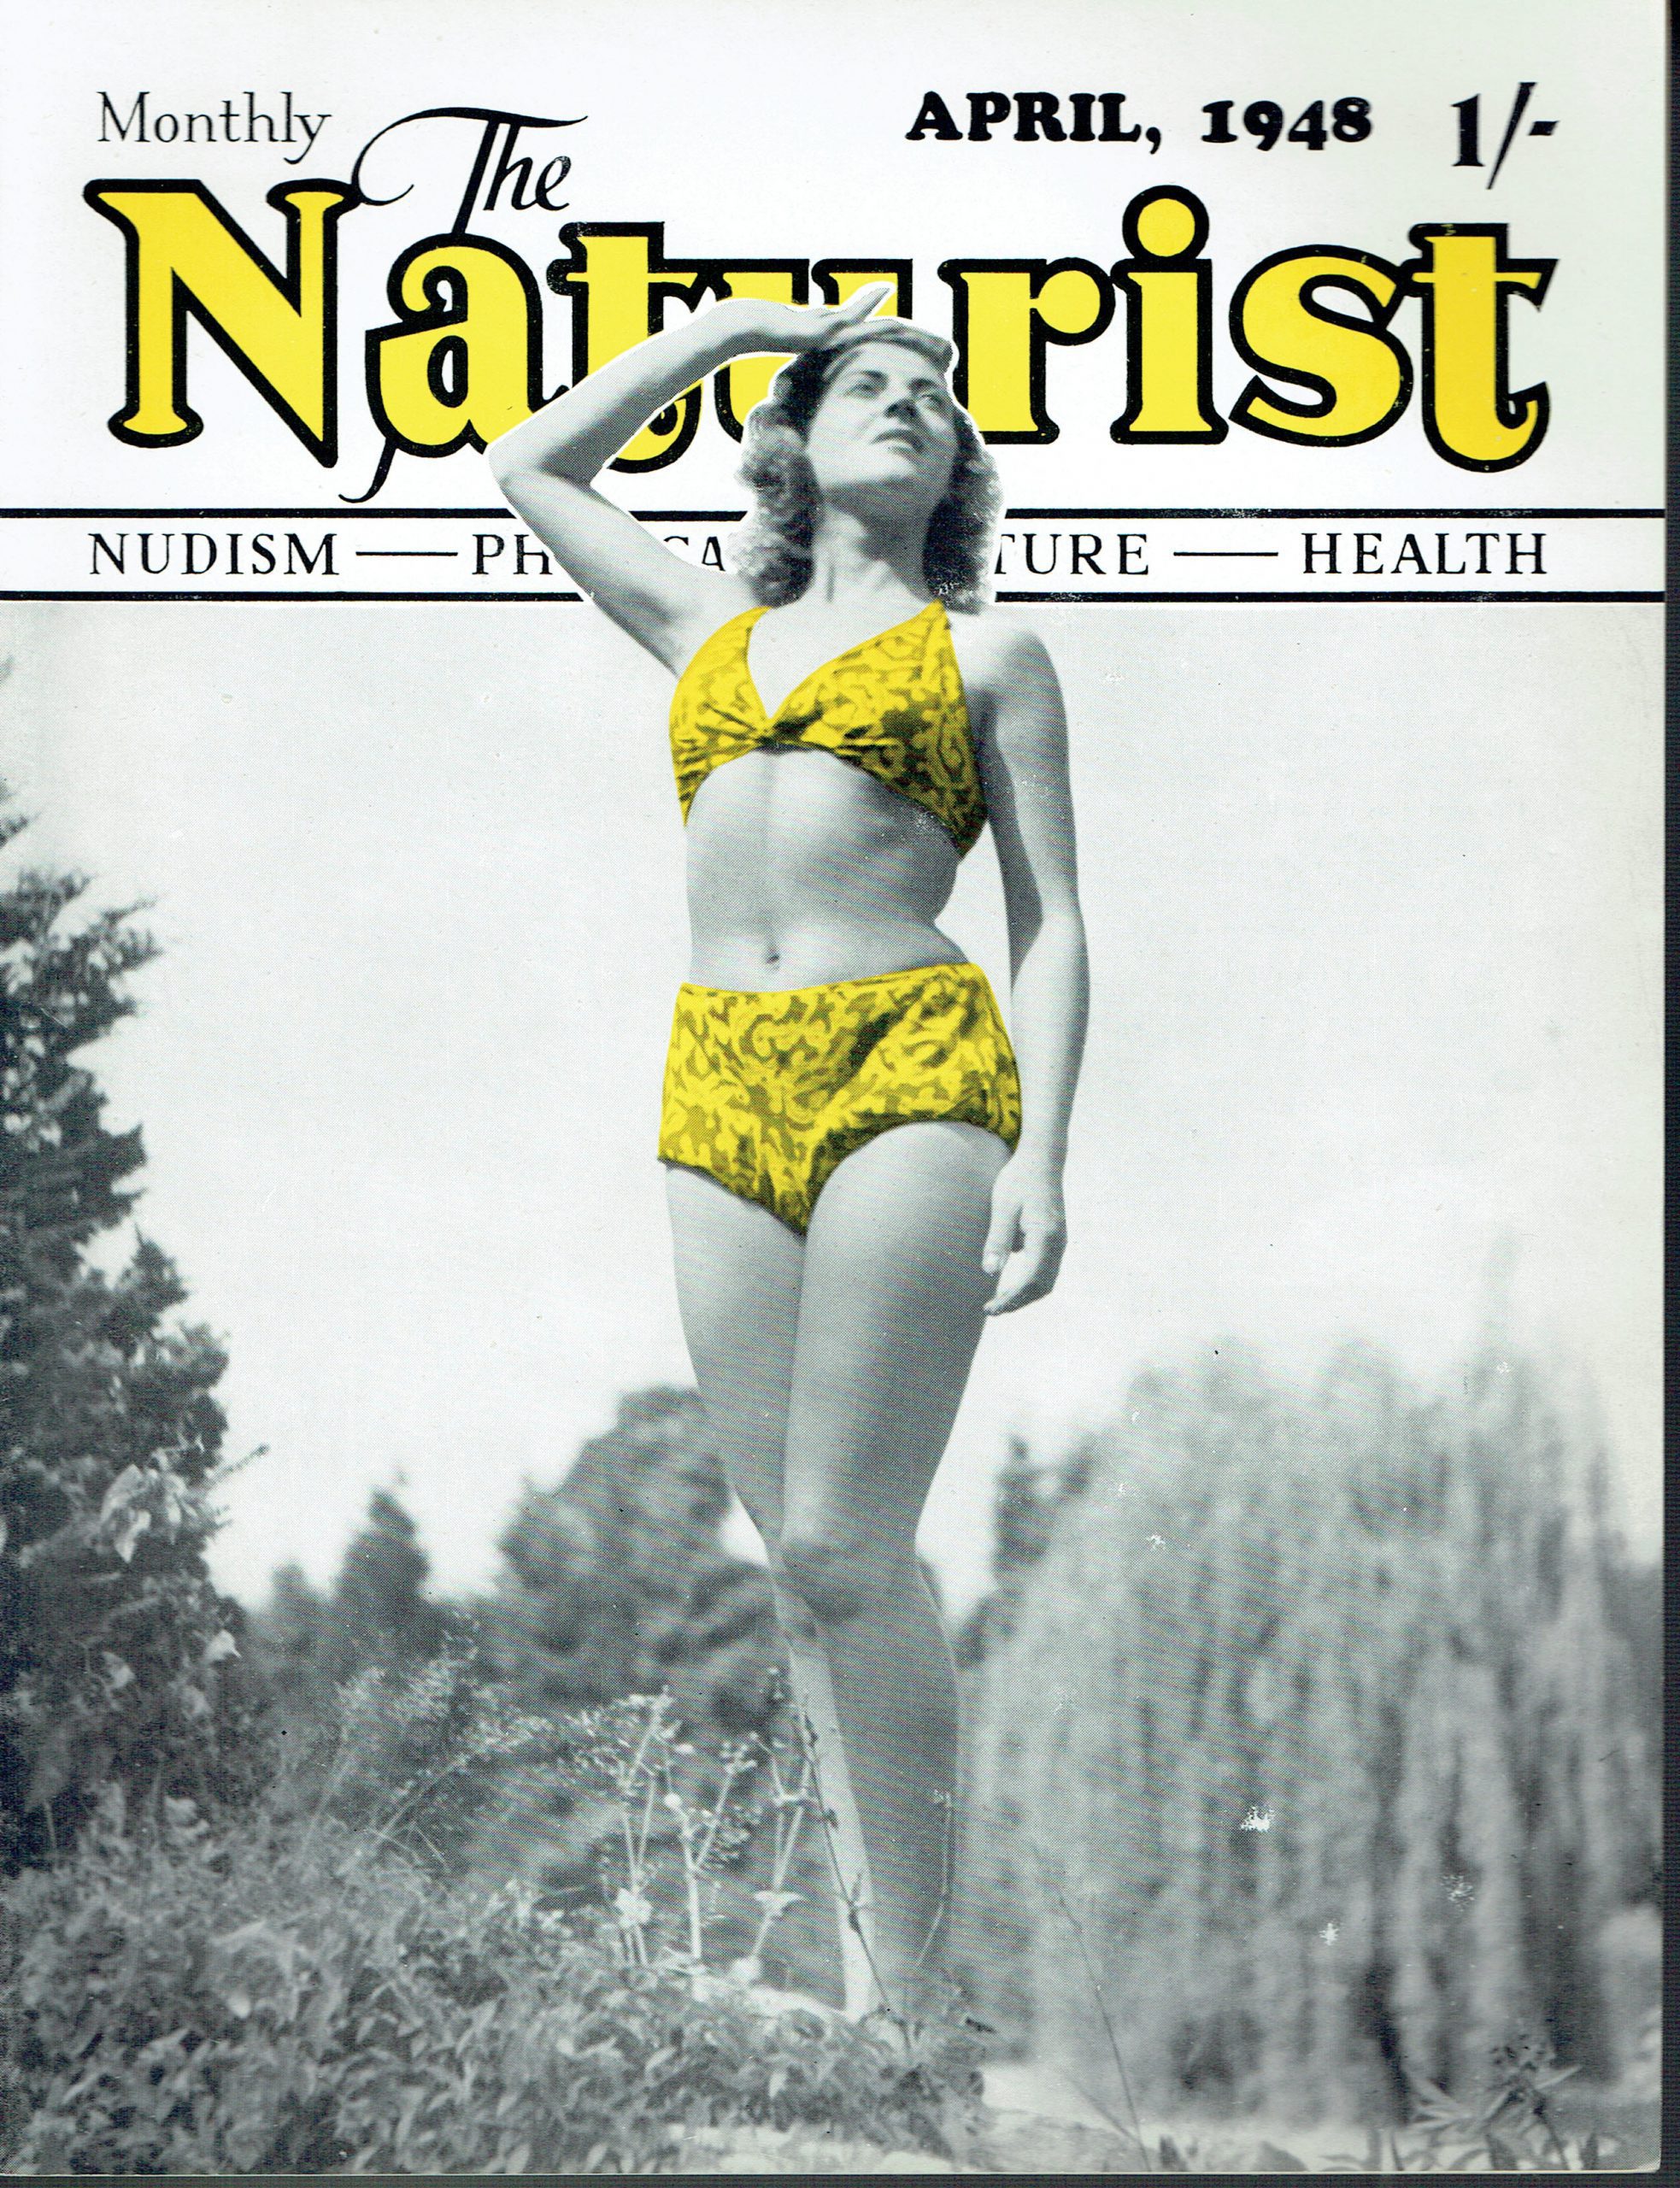 amanda dayley share vintage nudism pics photos